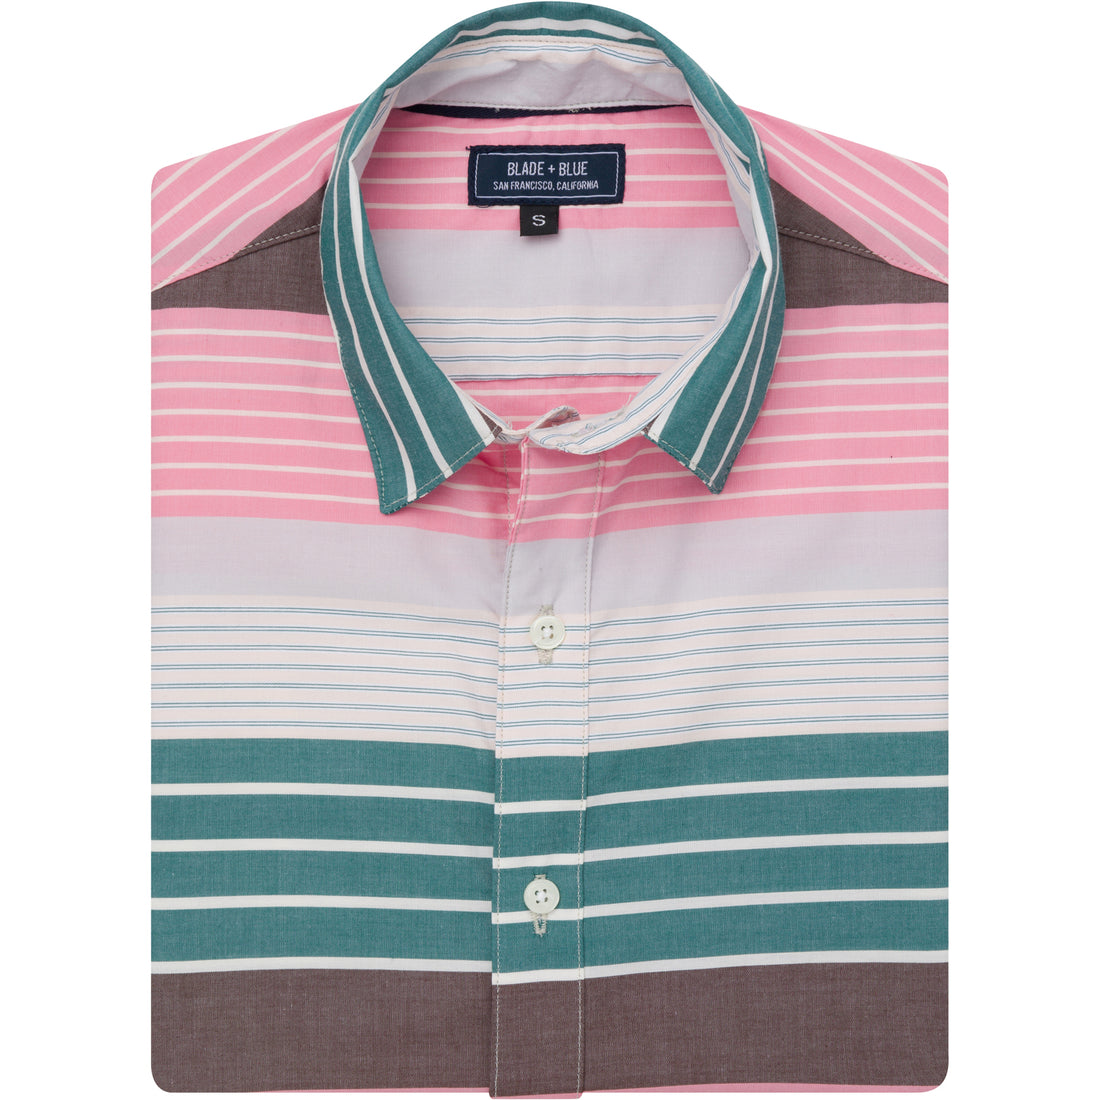 AUSTIN Short Sleeve Shirt in MultiColor Stripe